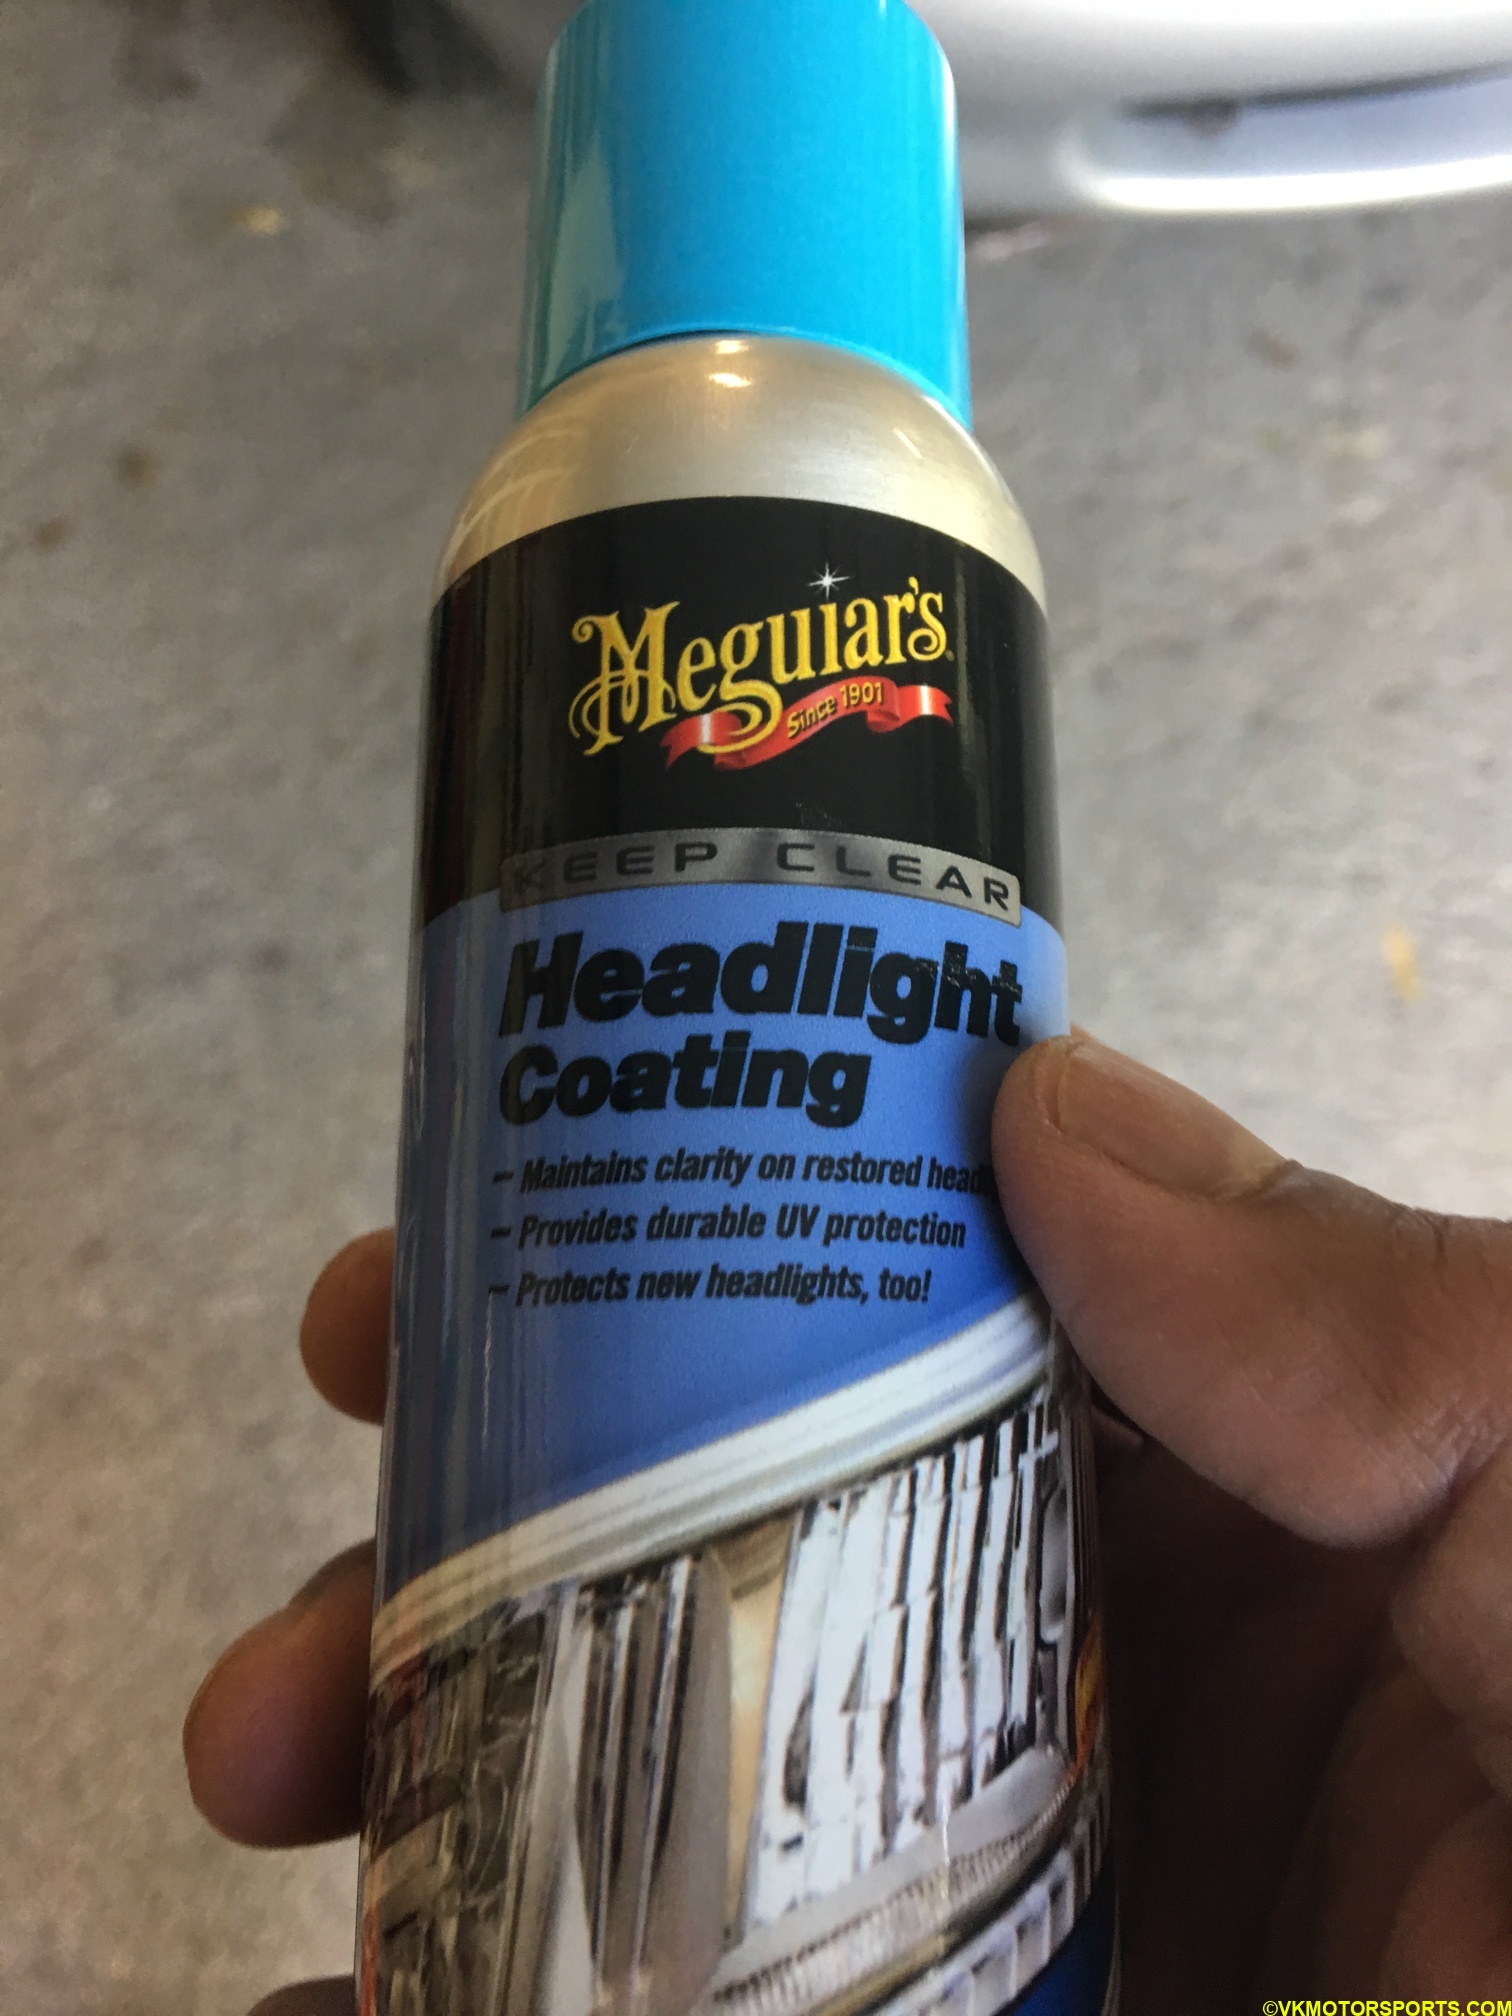 Headlight coating can